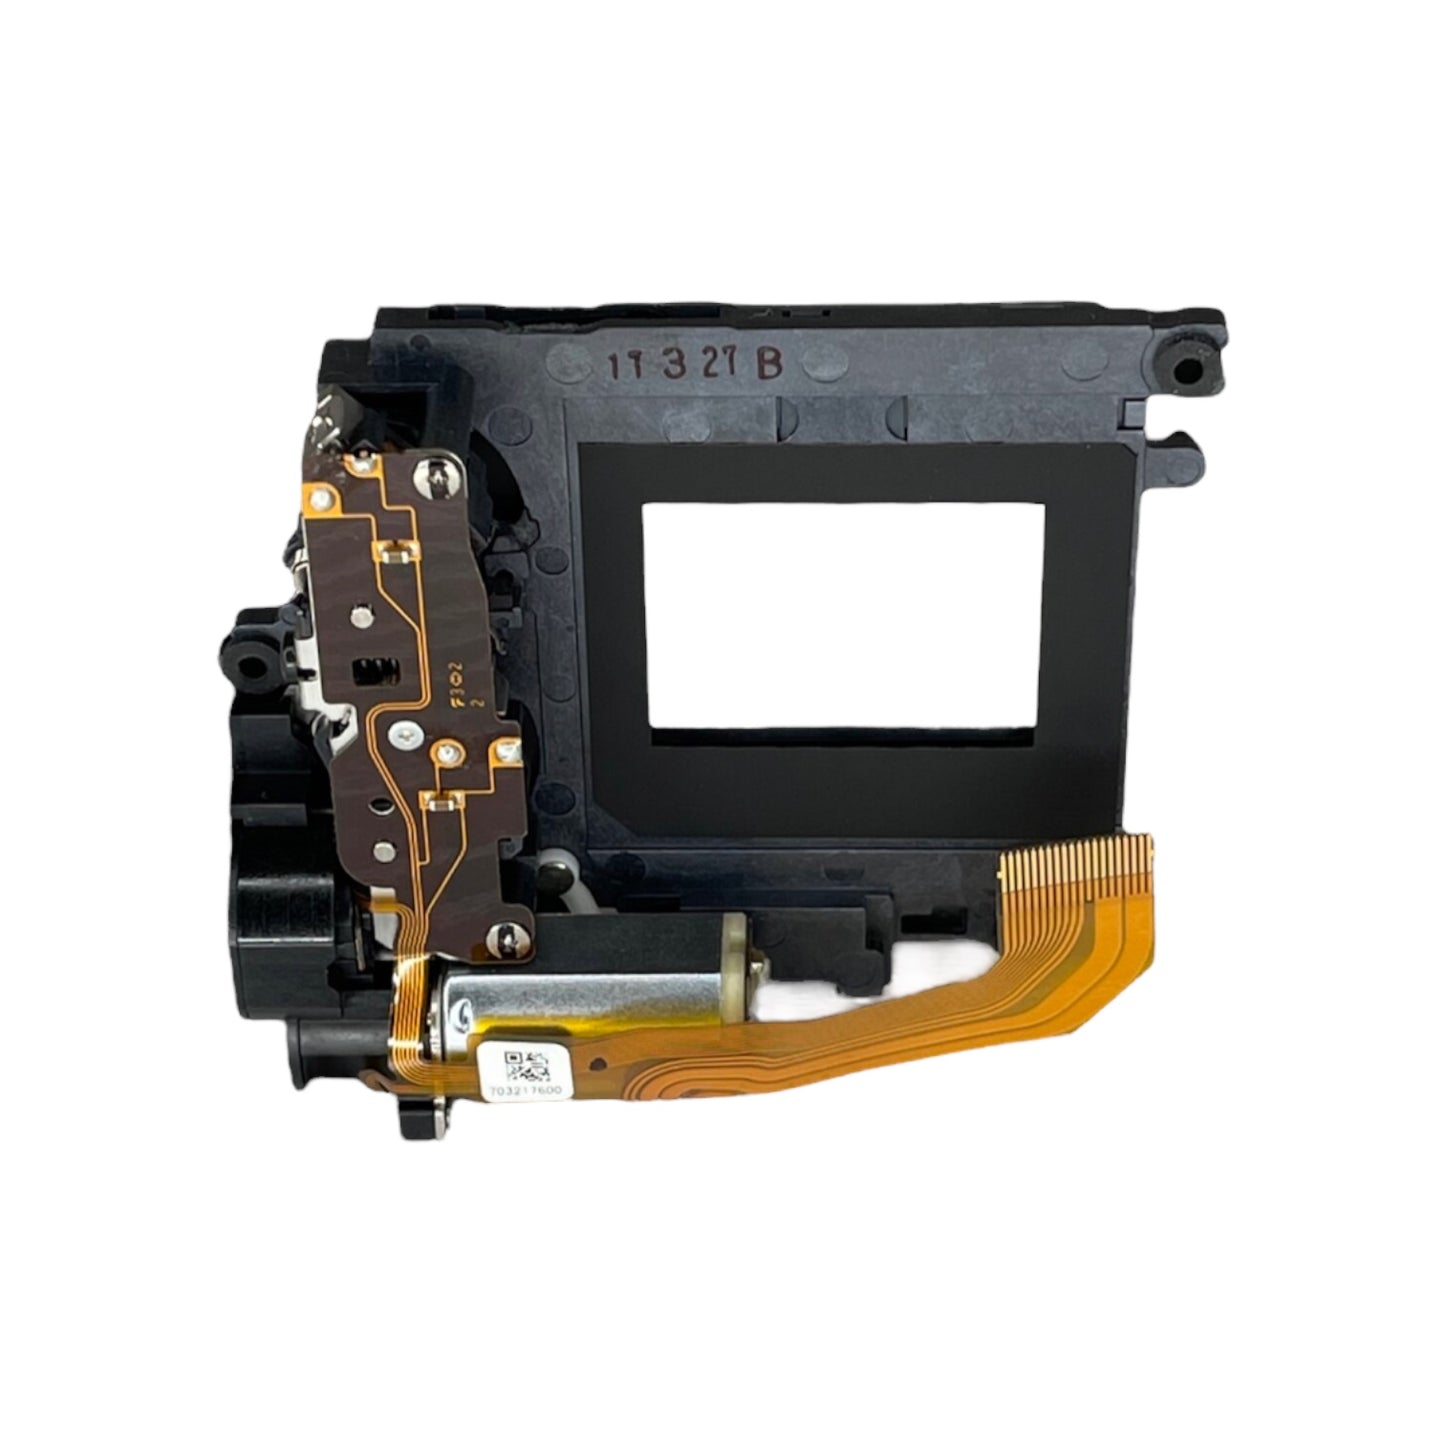 Fuji X-Pro 2 Shutter Assembly (Digital) 0